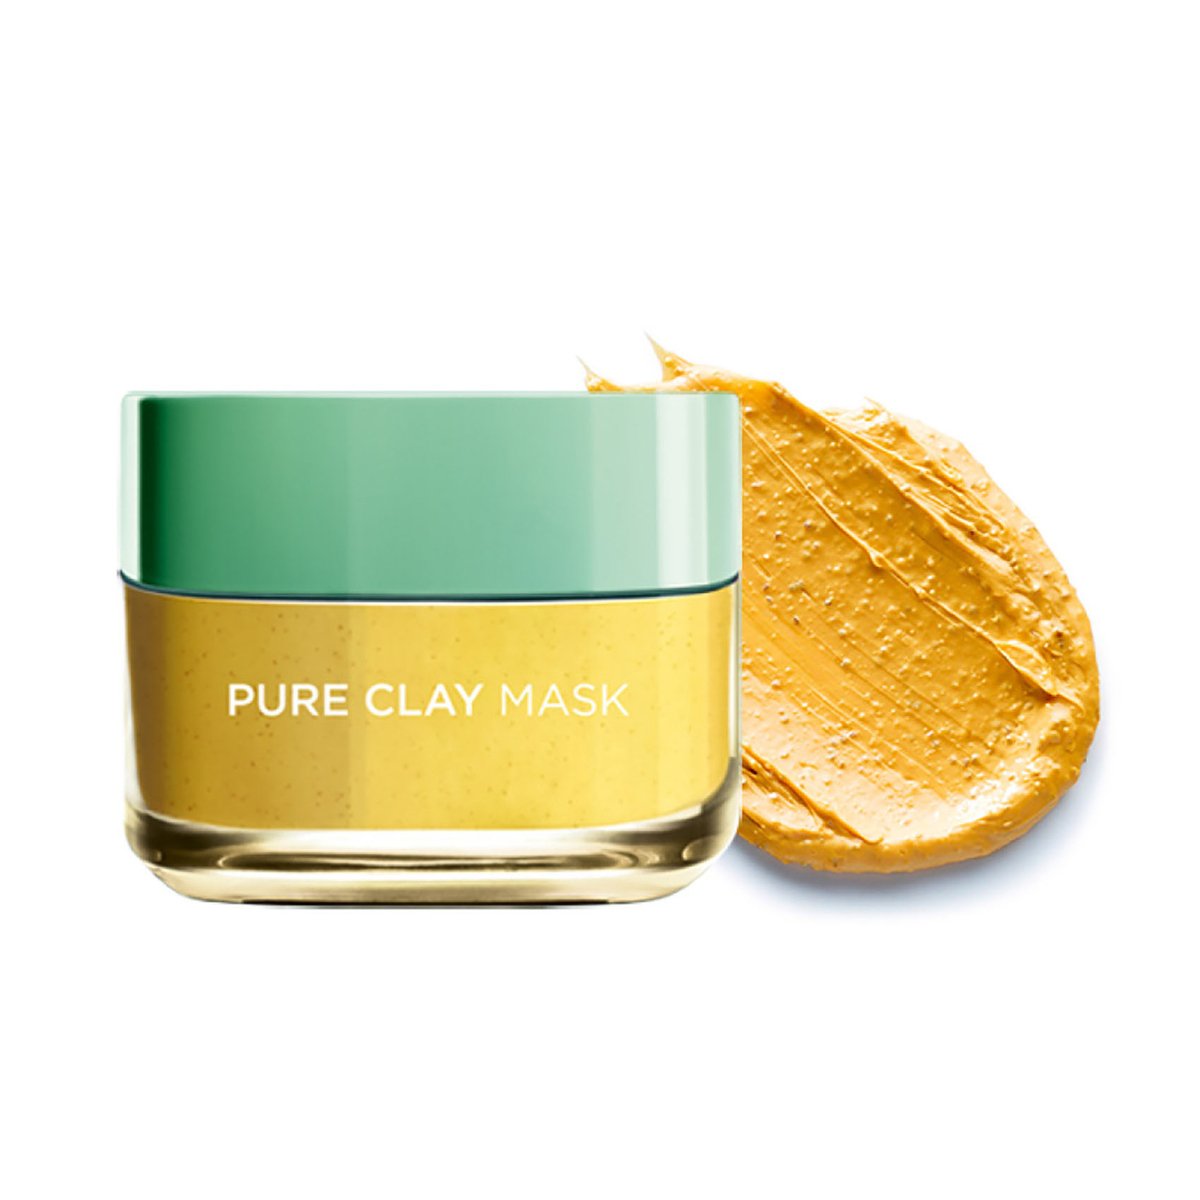 L'Oreal Paris Pure Clay Bright Mask with Yuzu Lemon 50 ml